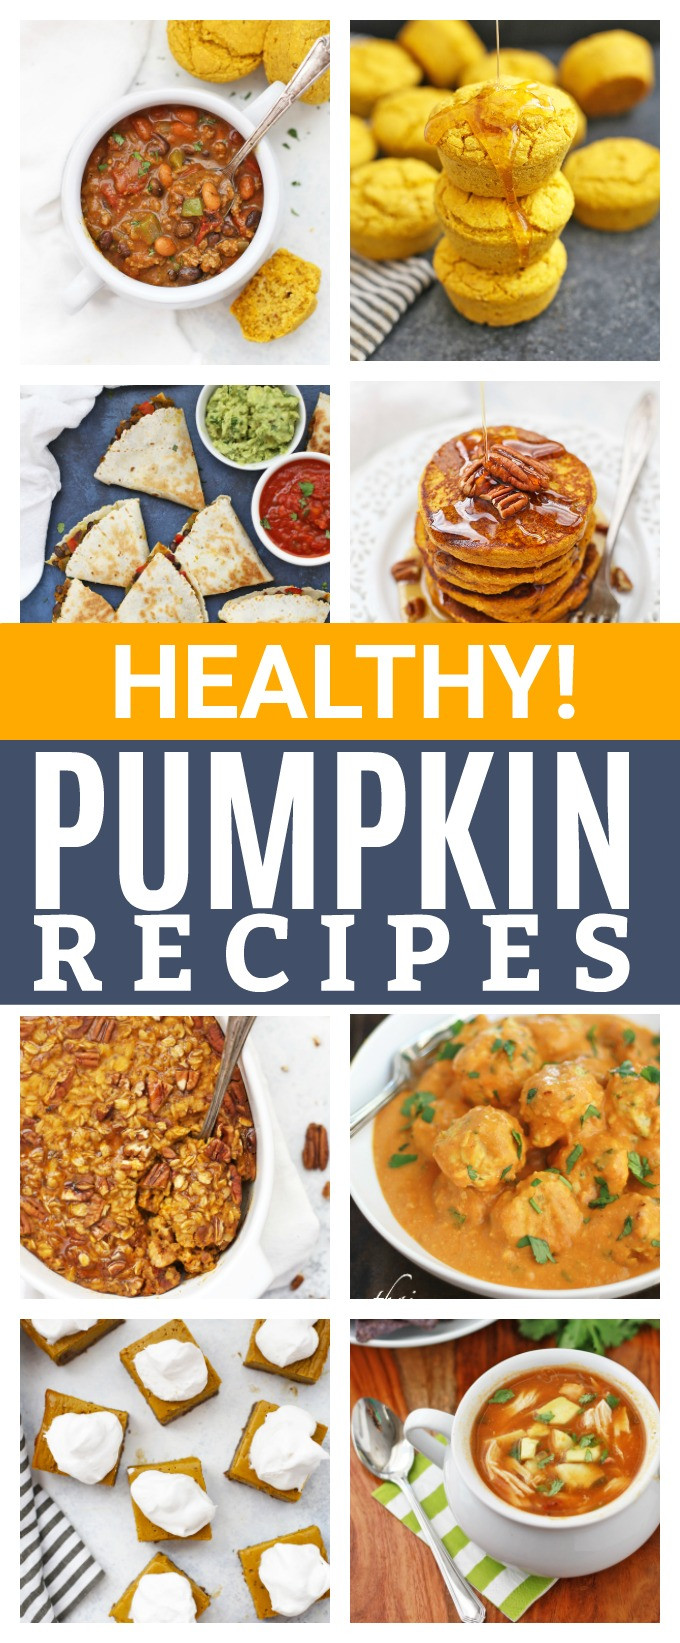 Pumpkin Recipes Healthy
 The BEST Healthy Pumpkin Recipes to Make This Season • e